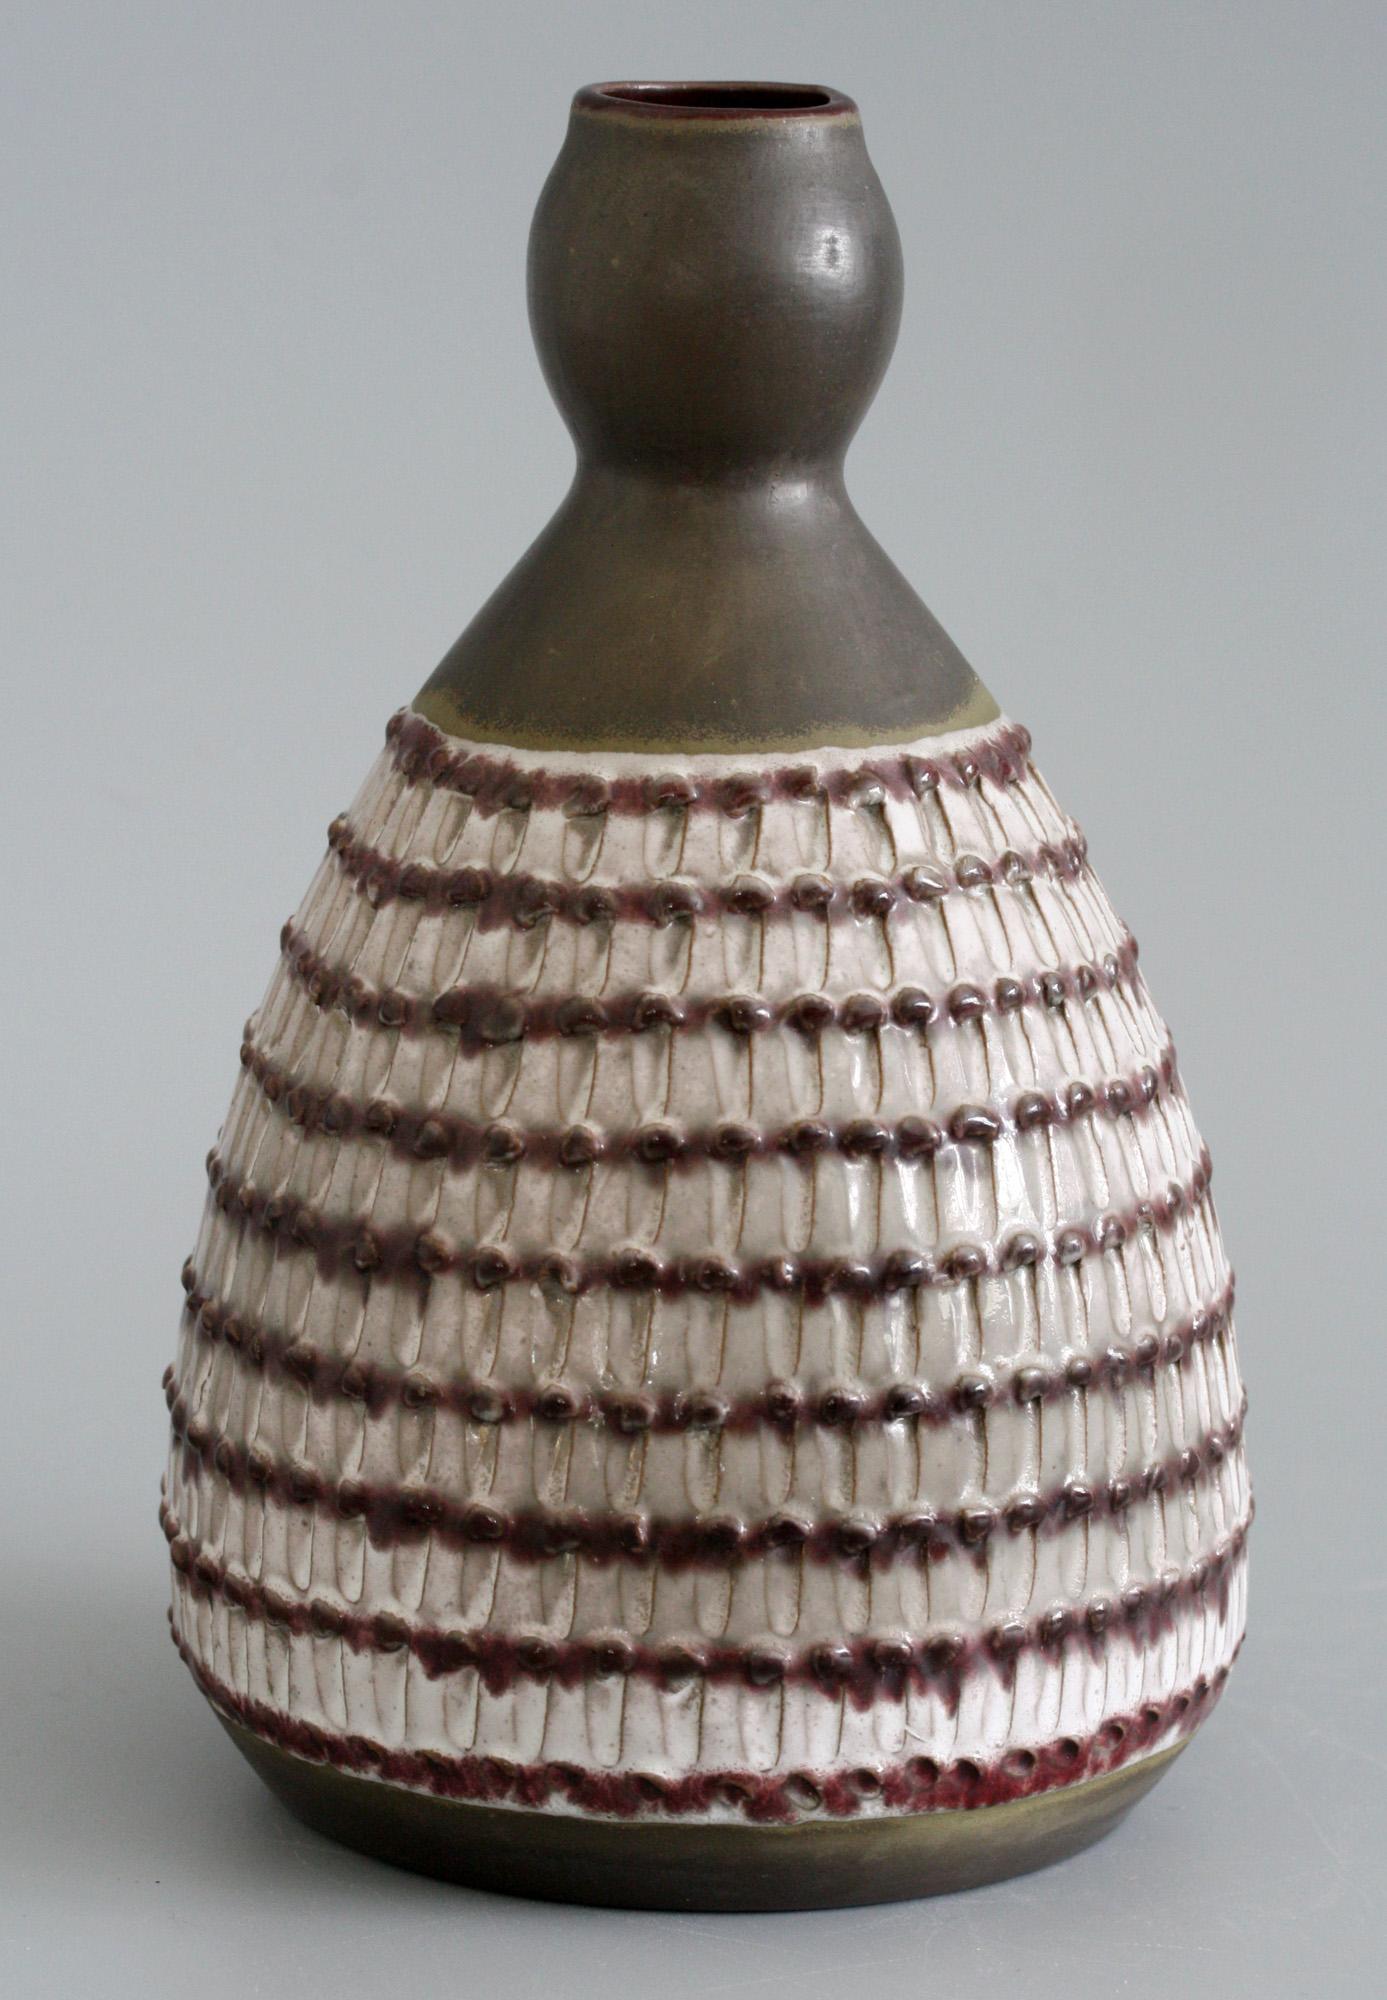 Midcentury German or Scandinavian Art Pottery Vase For Sale 2